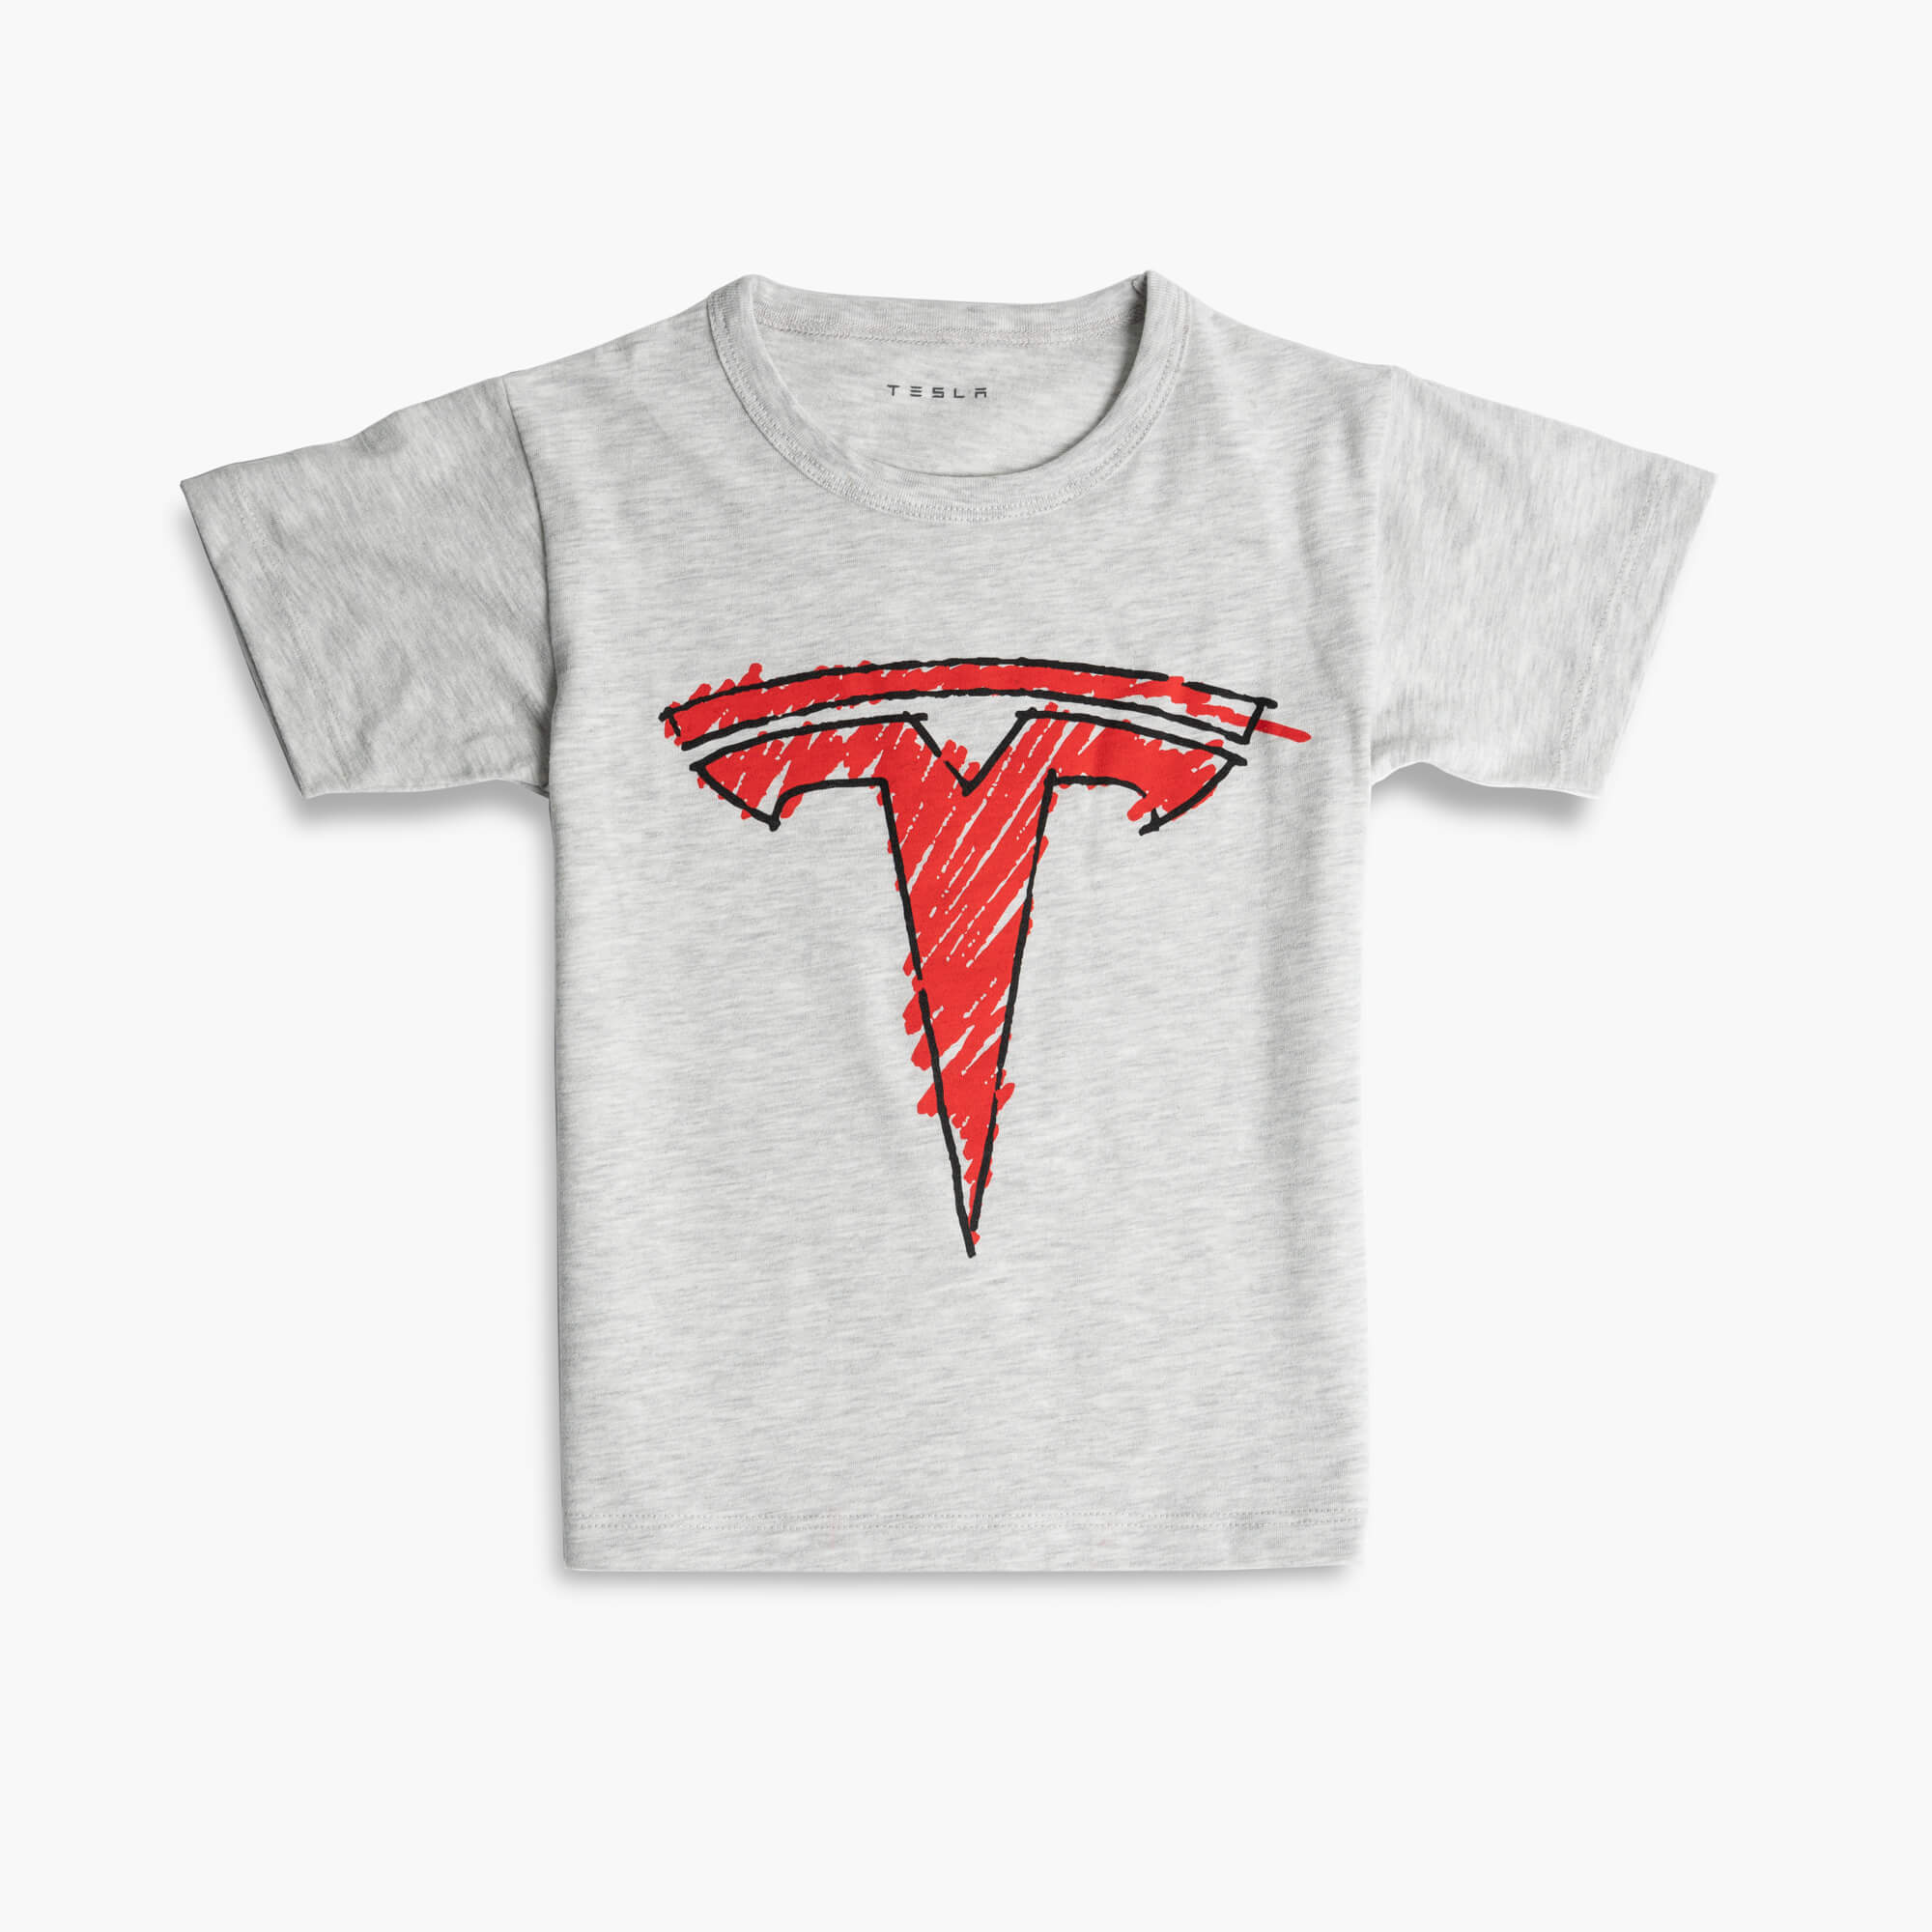 兒童手繪風Tesla T logo T恤